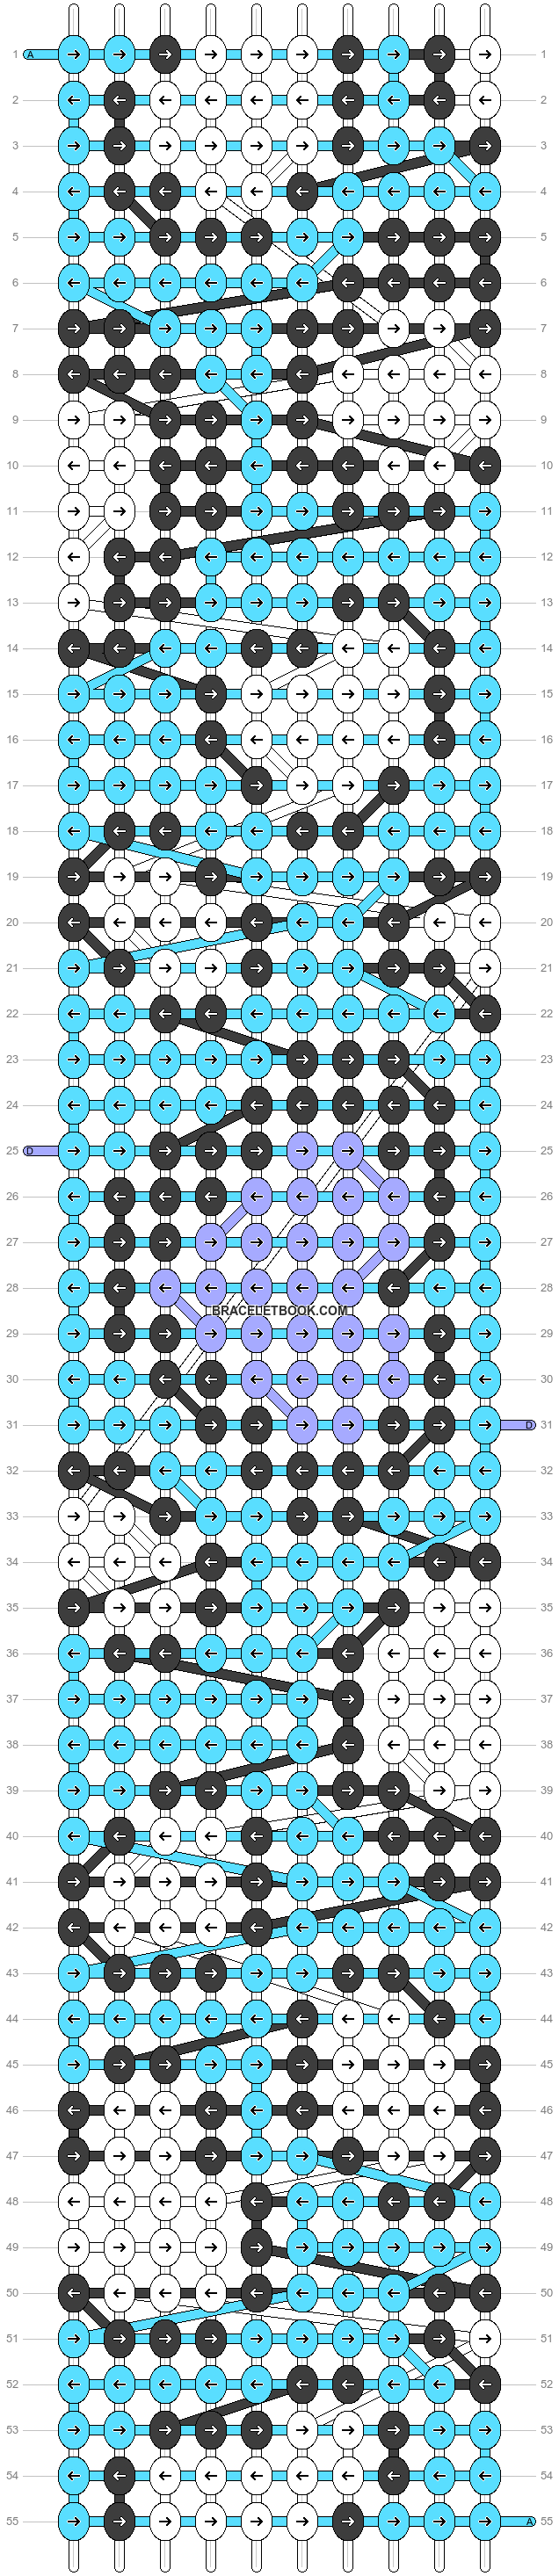 Alpha pattern #17852 variation #53648 pattern